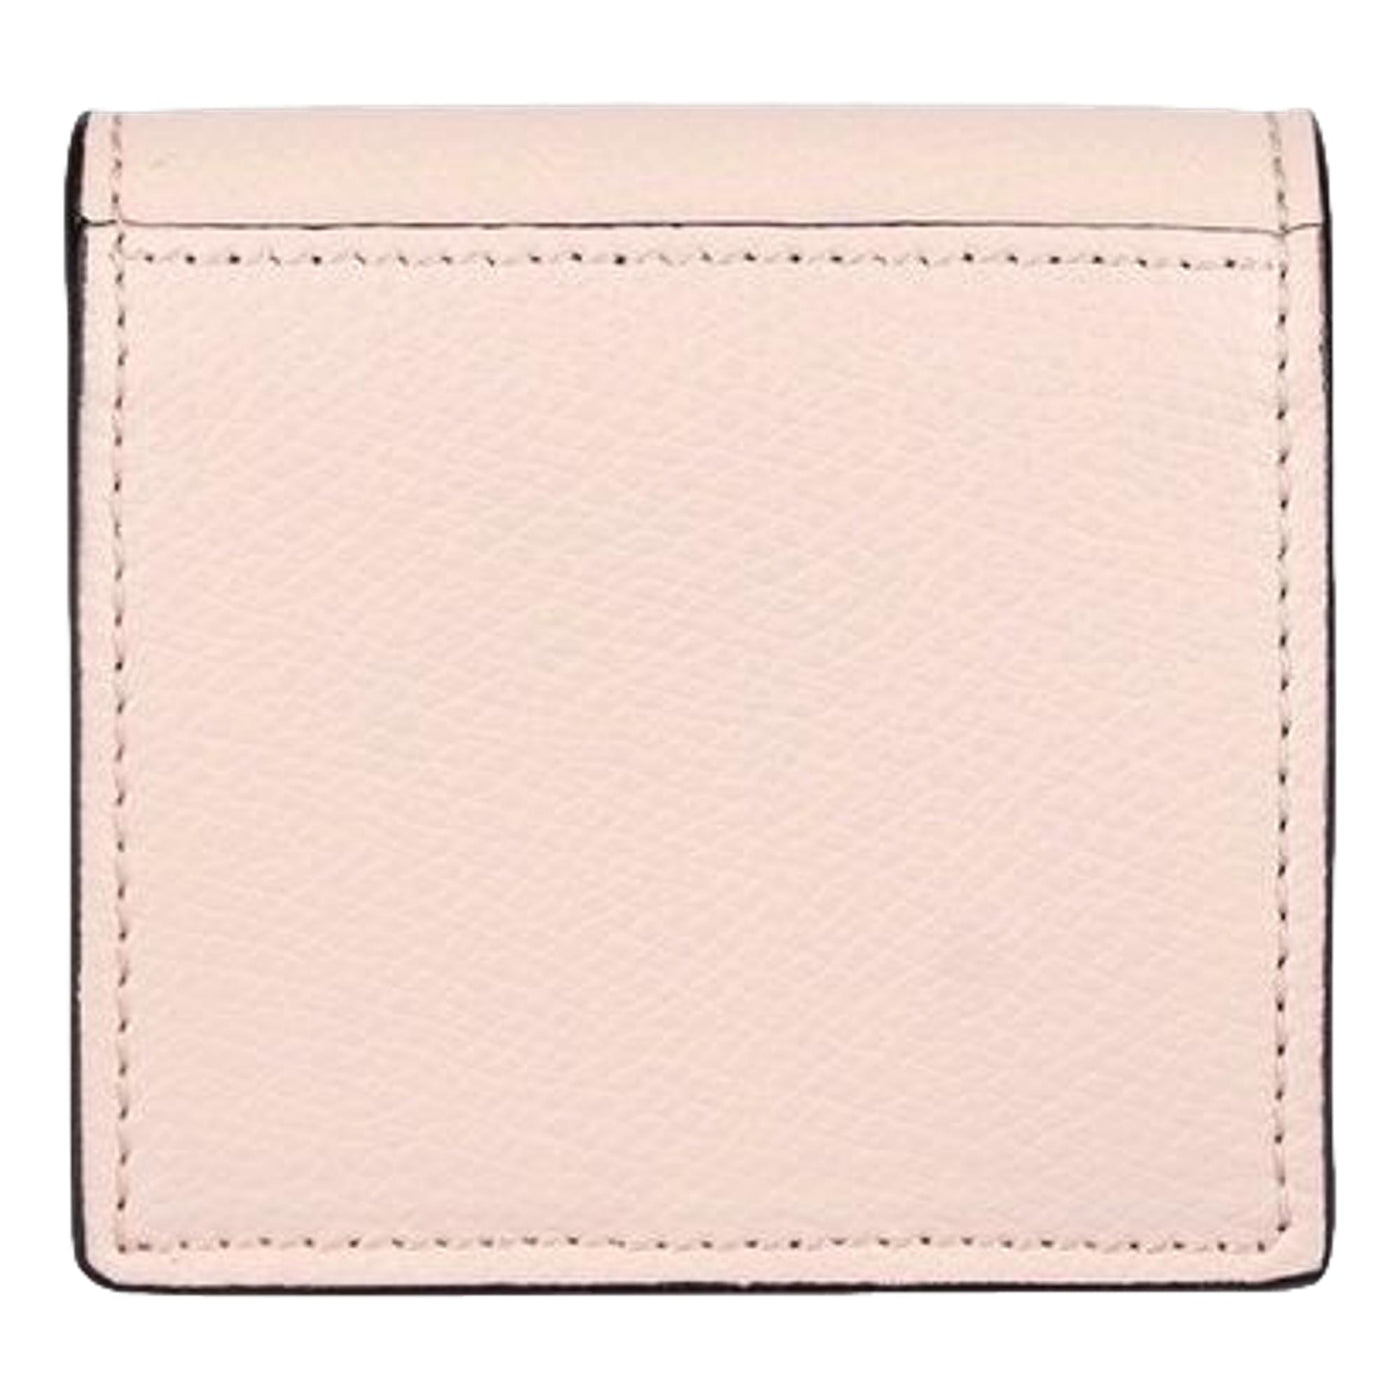 Fendi Calf Leather F Logo Poudre Pink Leather Coin Case - LUXURYMRKT